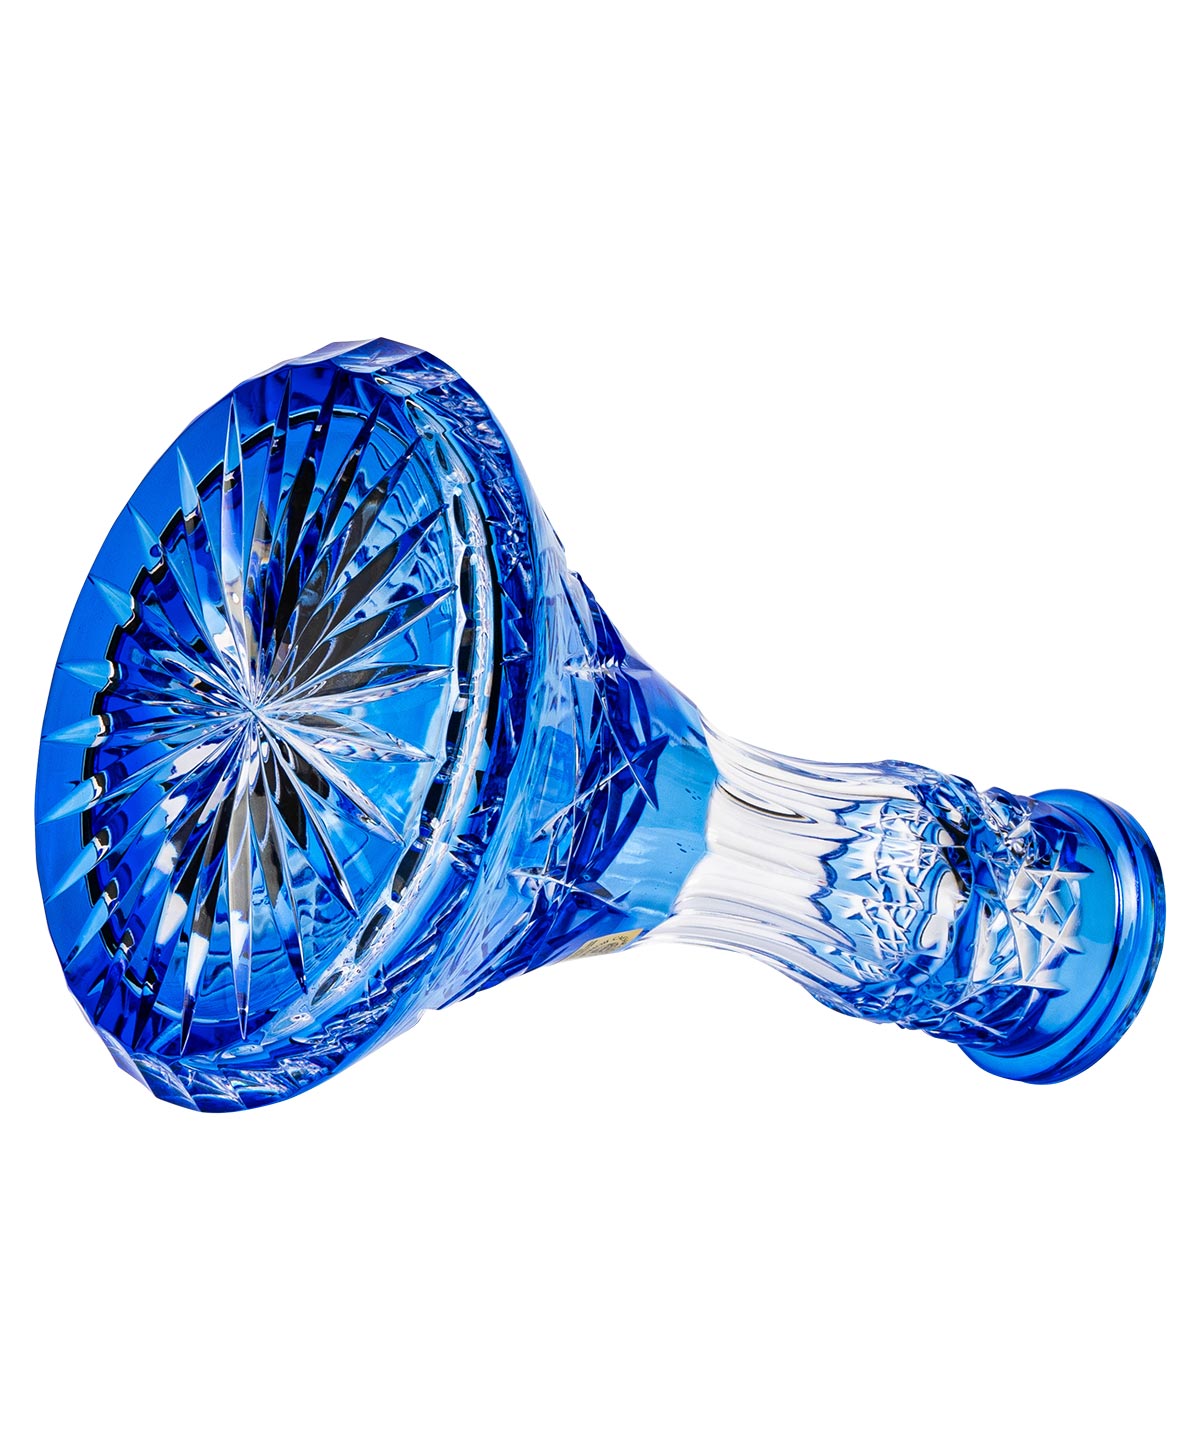 KVZE x Caesar Exclusive Glass Vortex - Cobalt